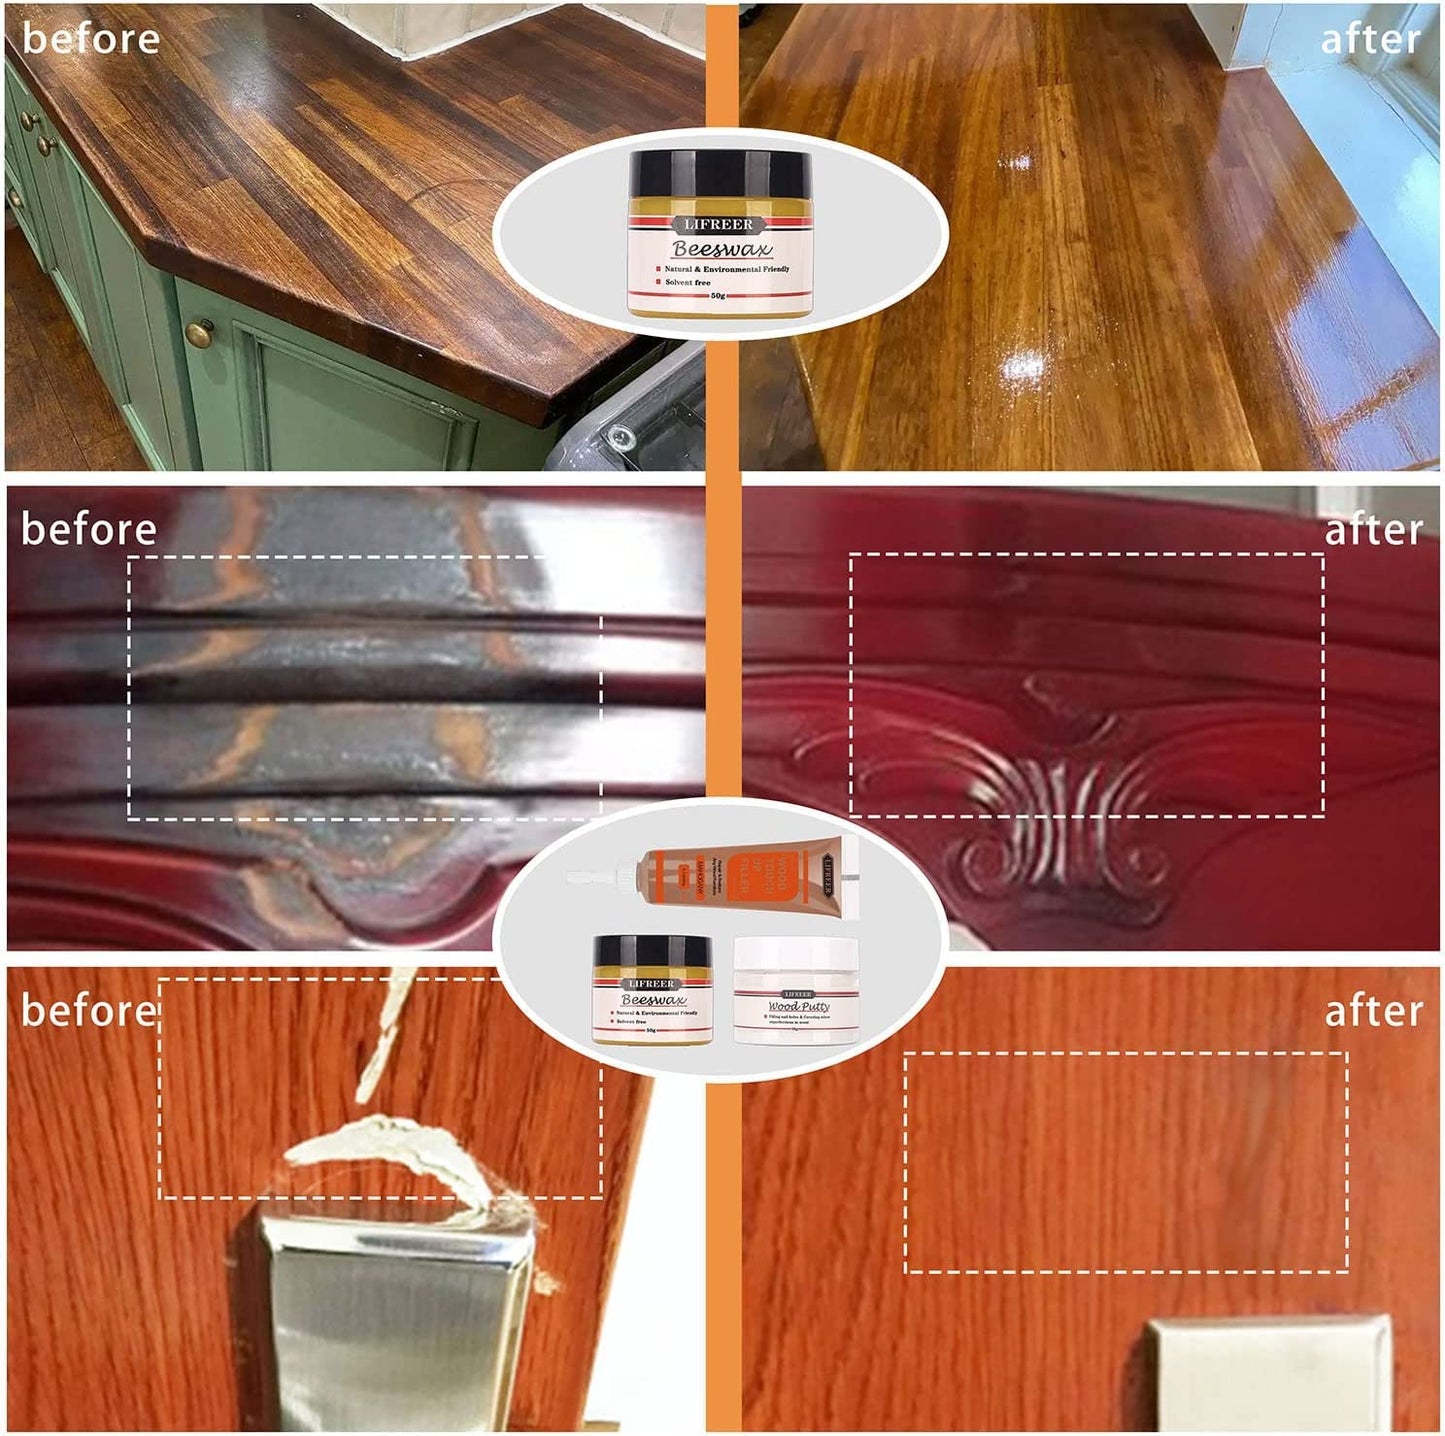 Lifreer Wood Furniture Repair Kit, High-Performance Wood Filler, Wood Putty with Beeswax - Hardwood Floor Scratch Repair Kit for Scratch, Cracks,